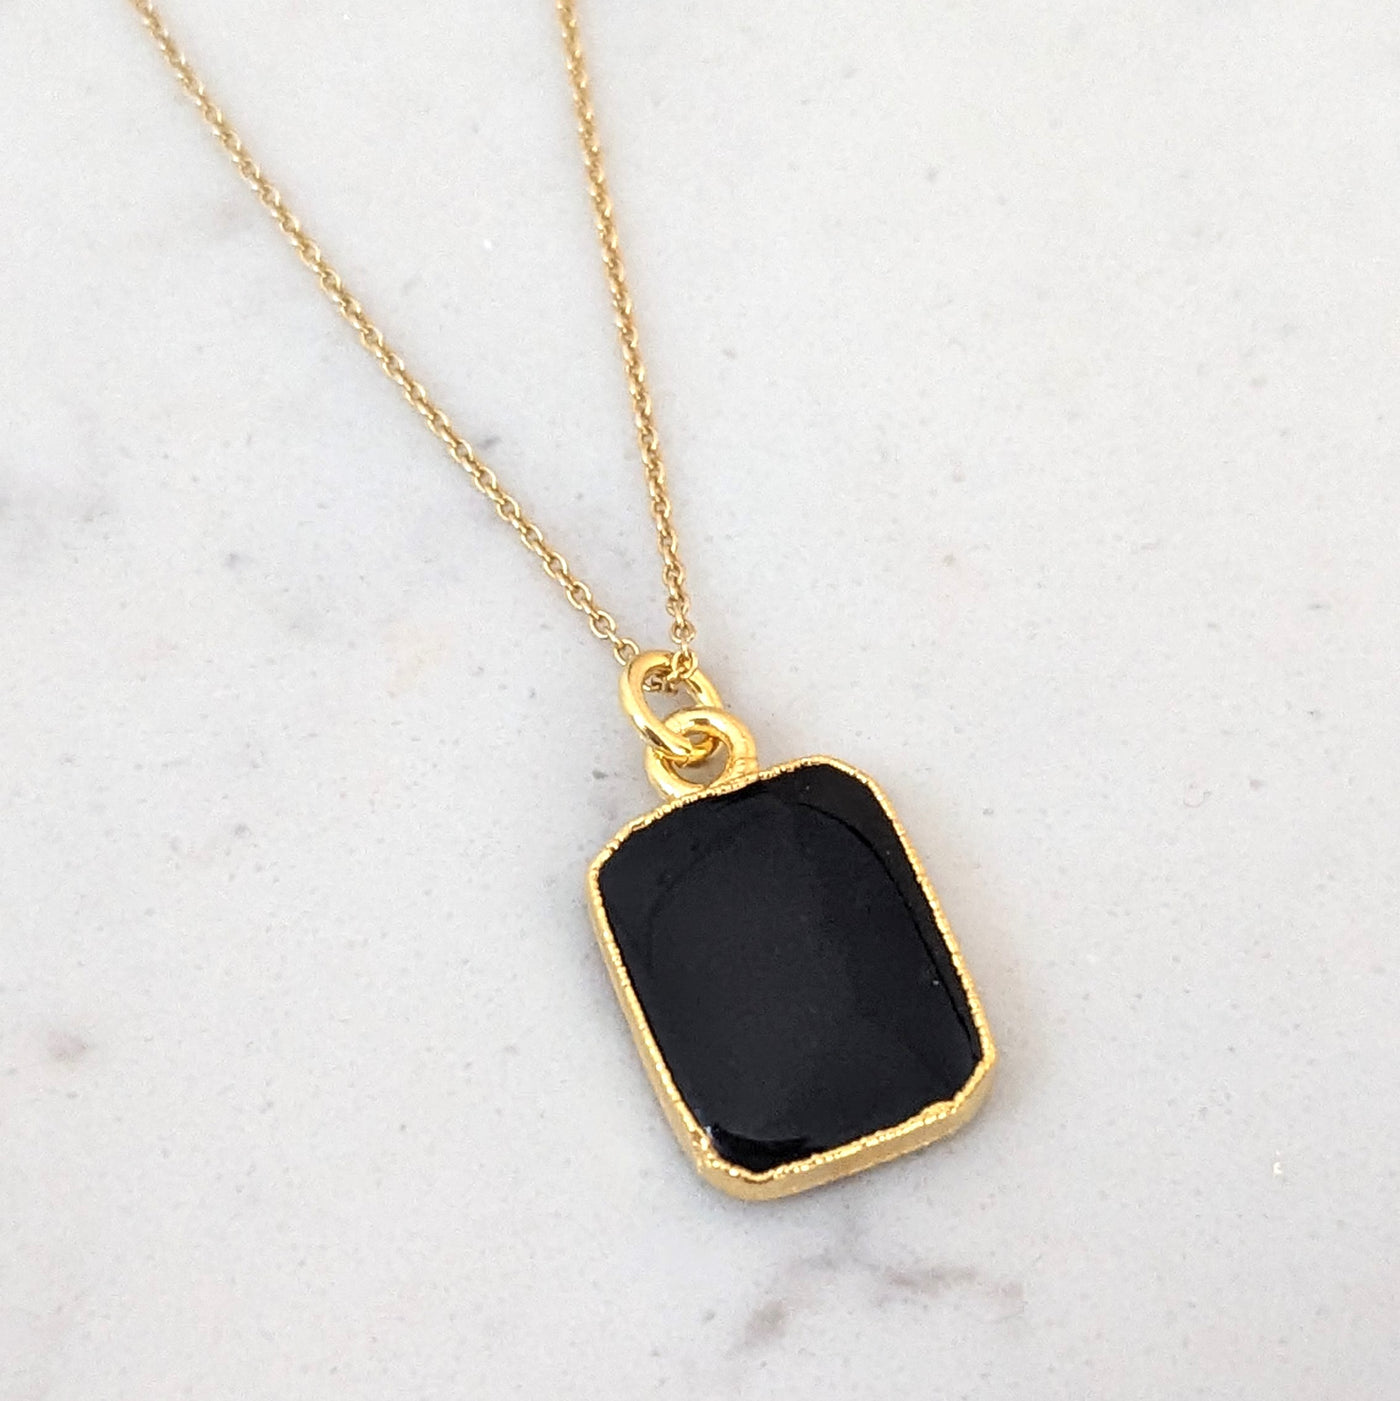 18 carat gold plated black onyx rectangular pendant gemstone necklace